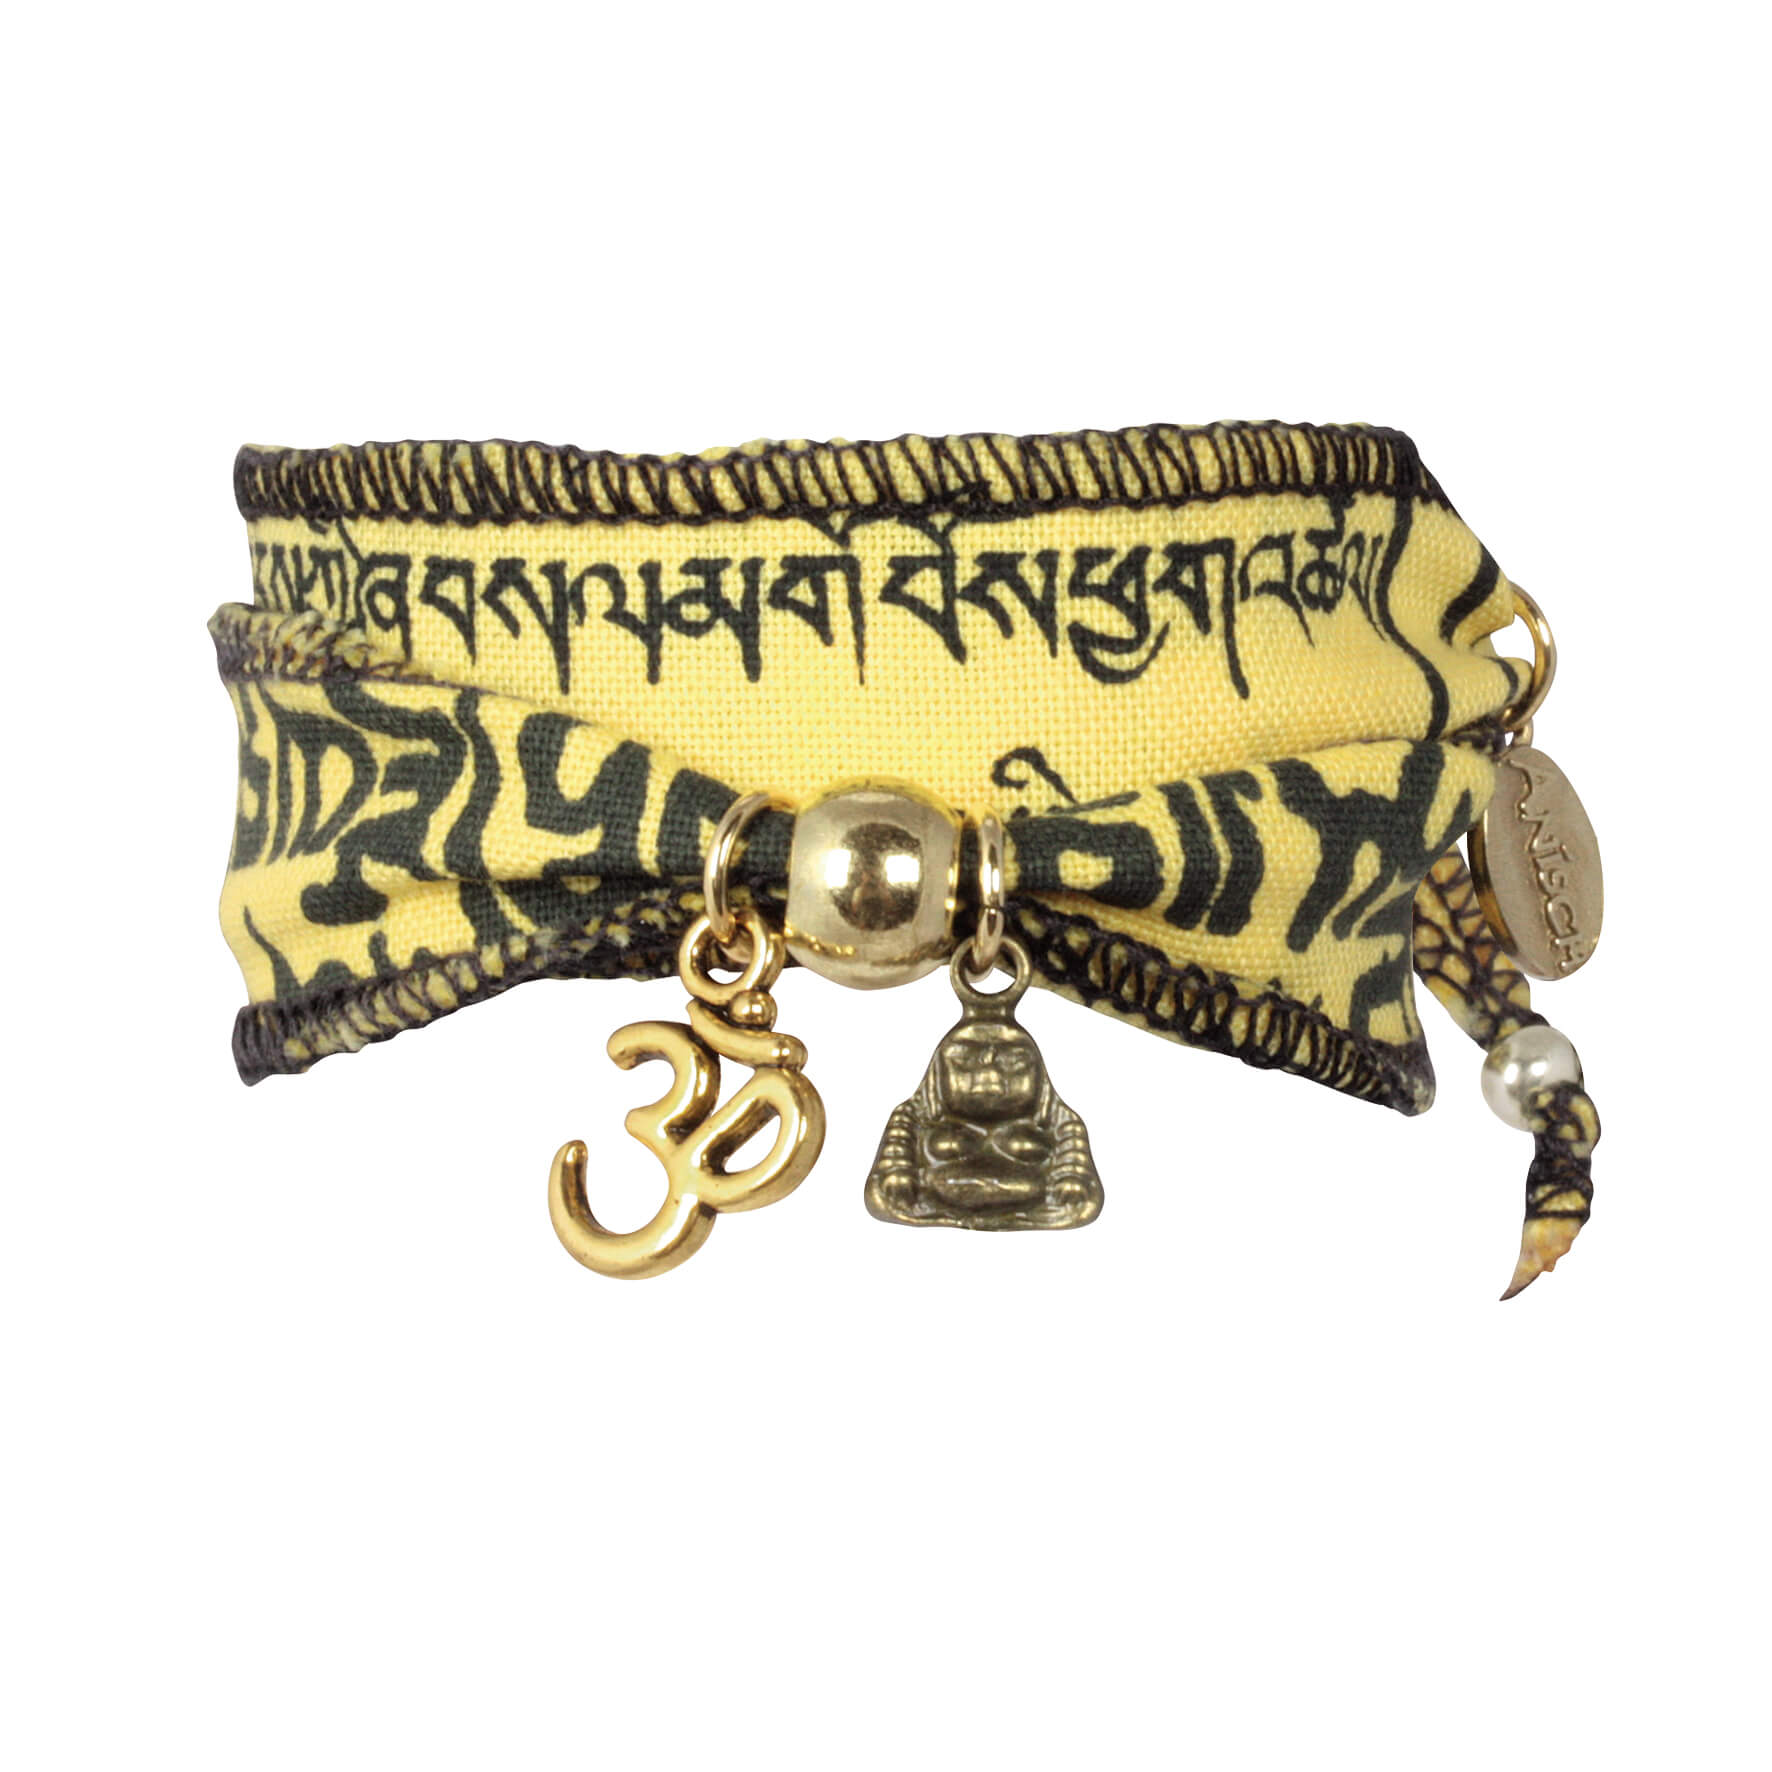 Earth Om - Tibetan Wish bracelet made from Tibetan prayer flags